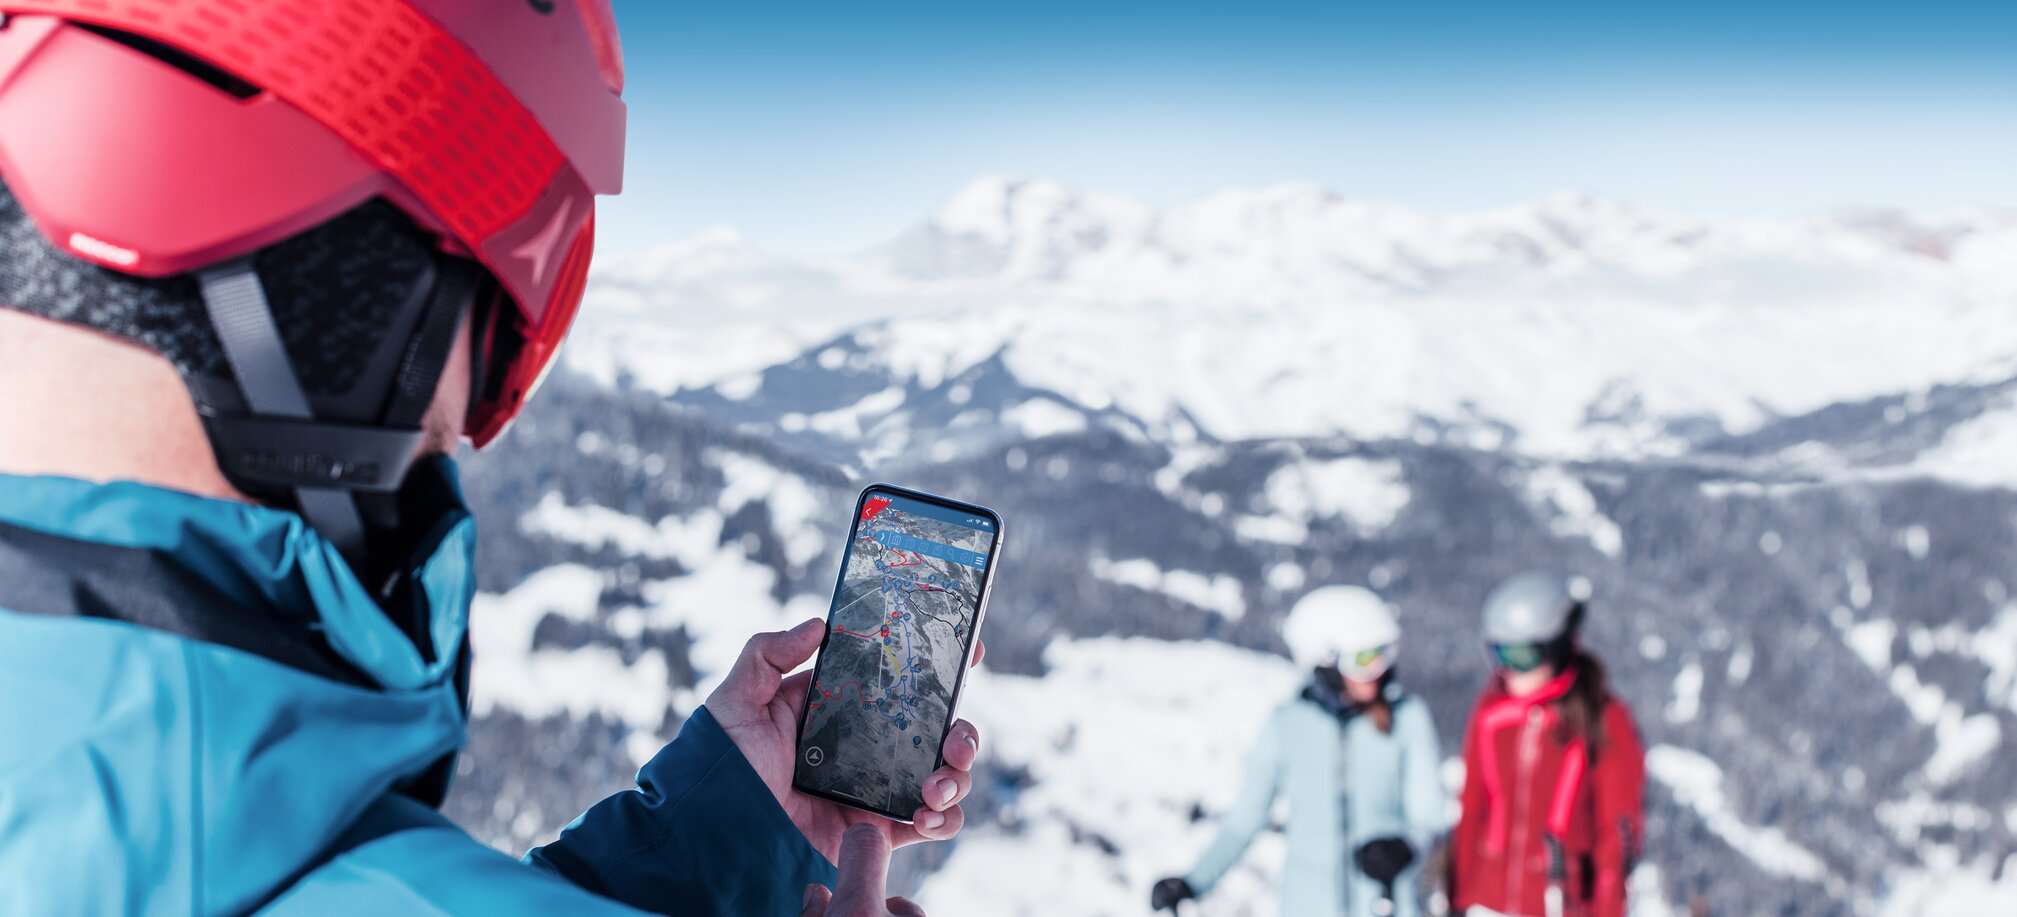 DIGITAL Ski amadé - free WIFI and Ski amadé Guide App always keep you updated